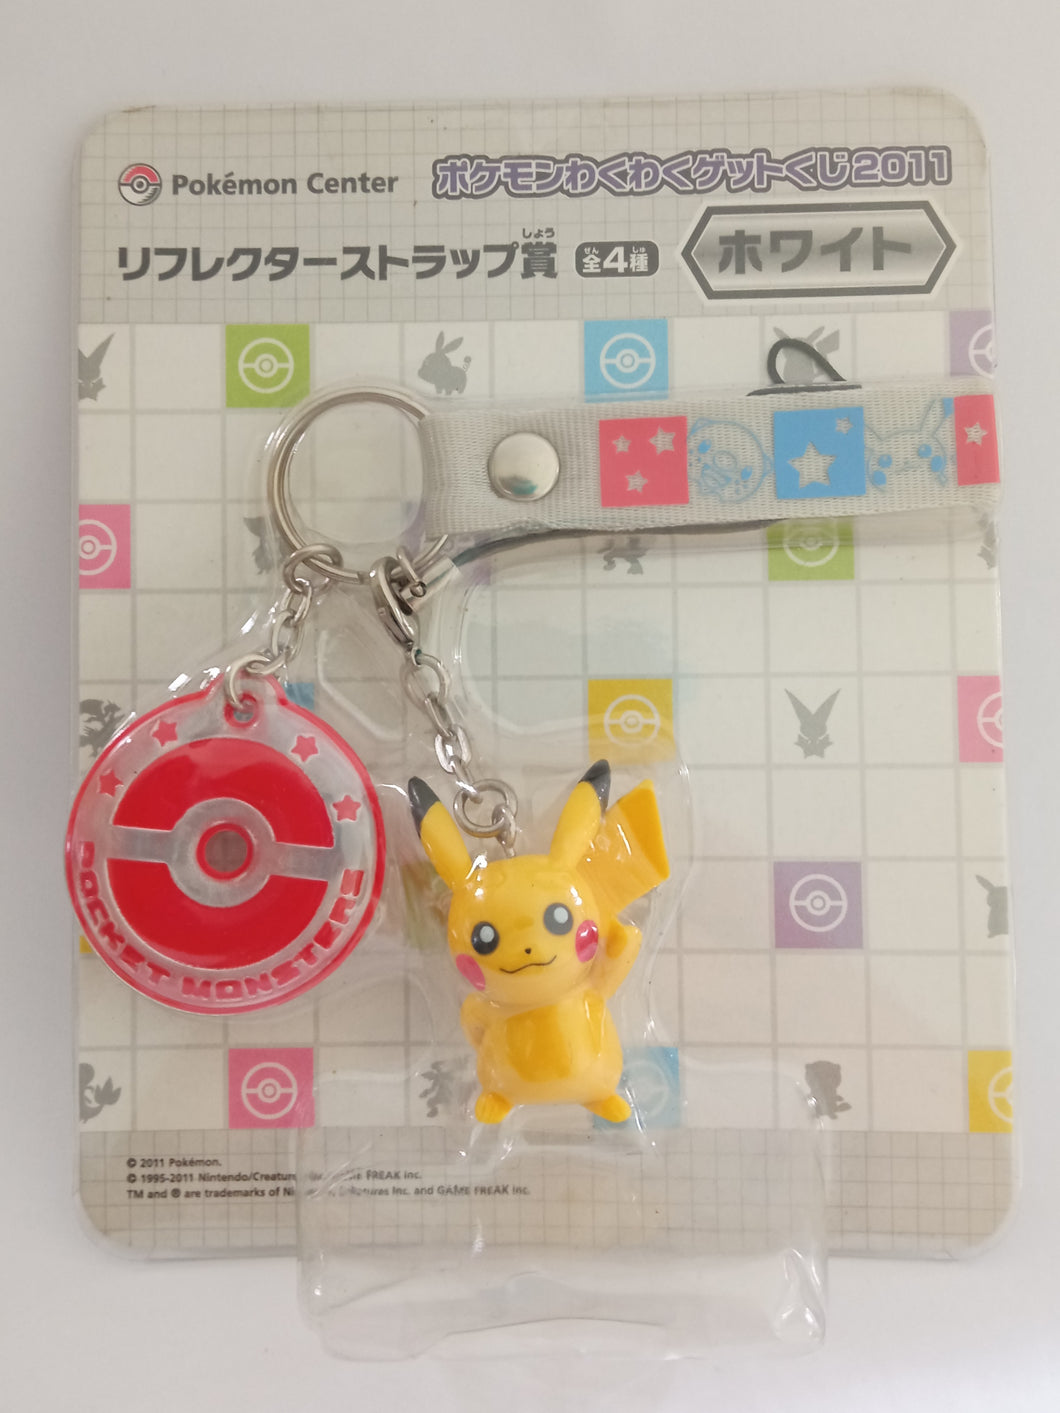 Pokémon Center Wakuwaku Get Kuji 2011 Pikachu Figure Mascot Charm Reflector Strap Keychain & Neck Strap Lanyard Prize